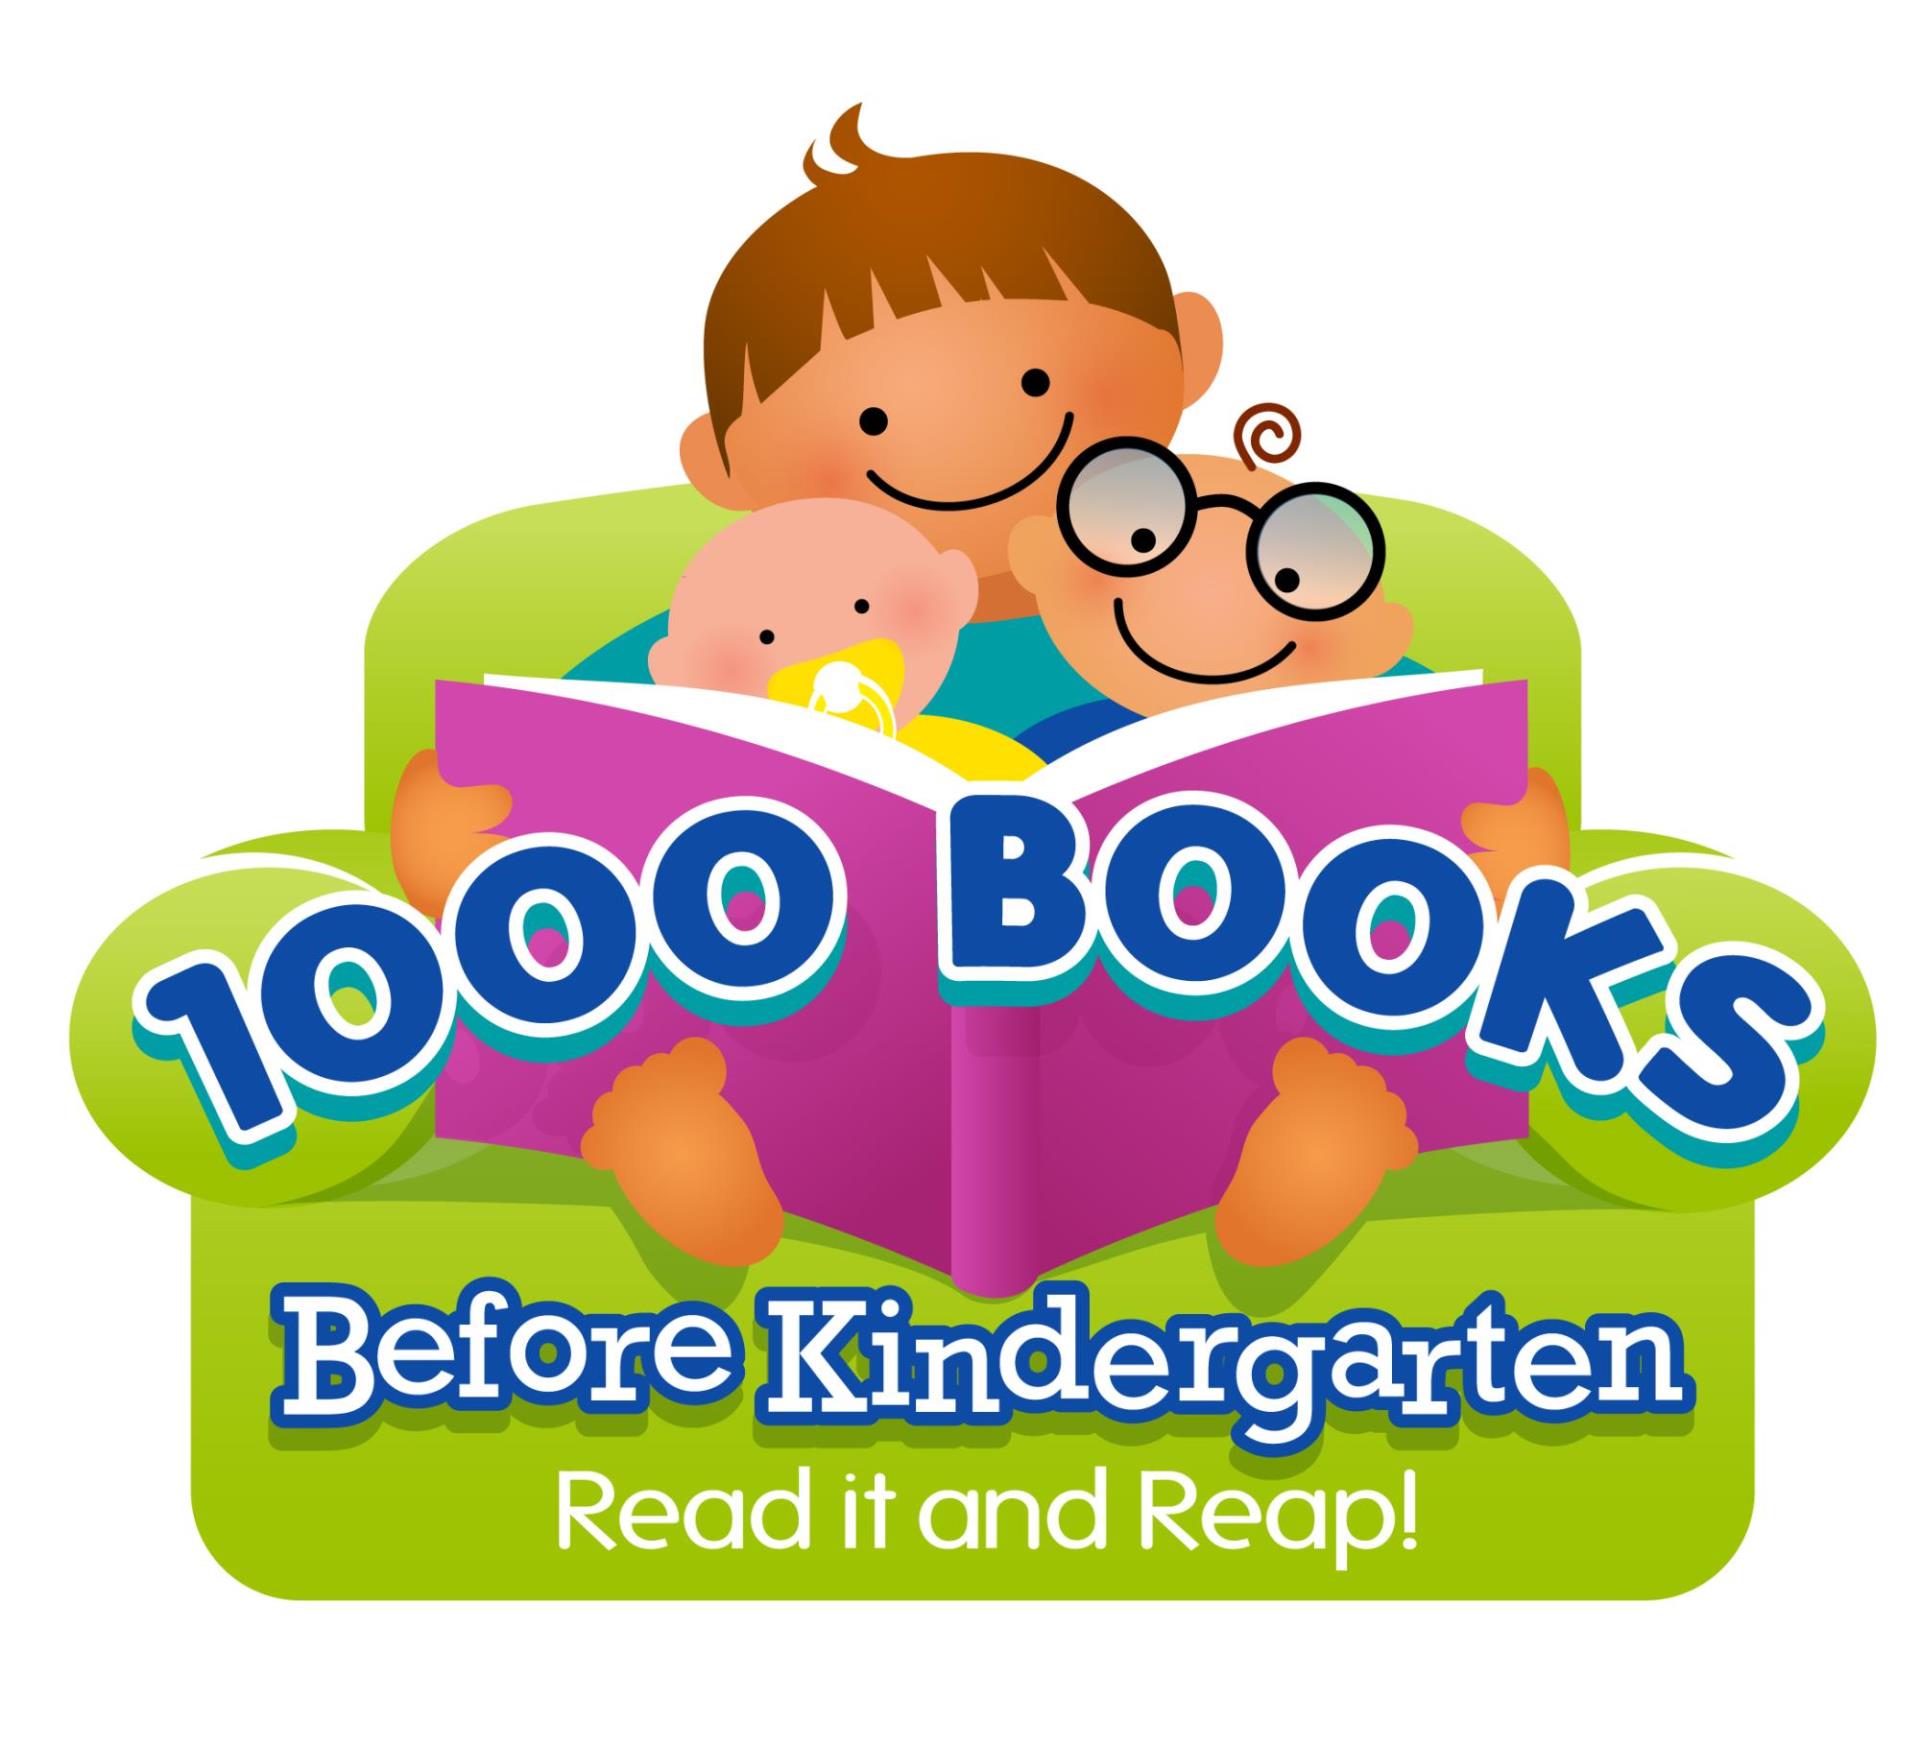 1000 Books green-logo